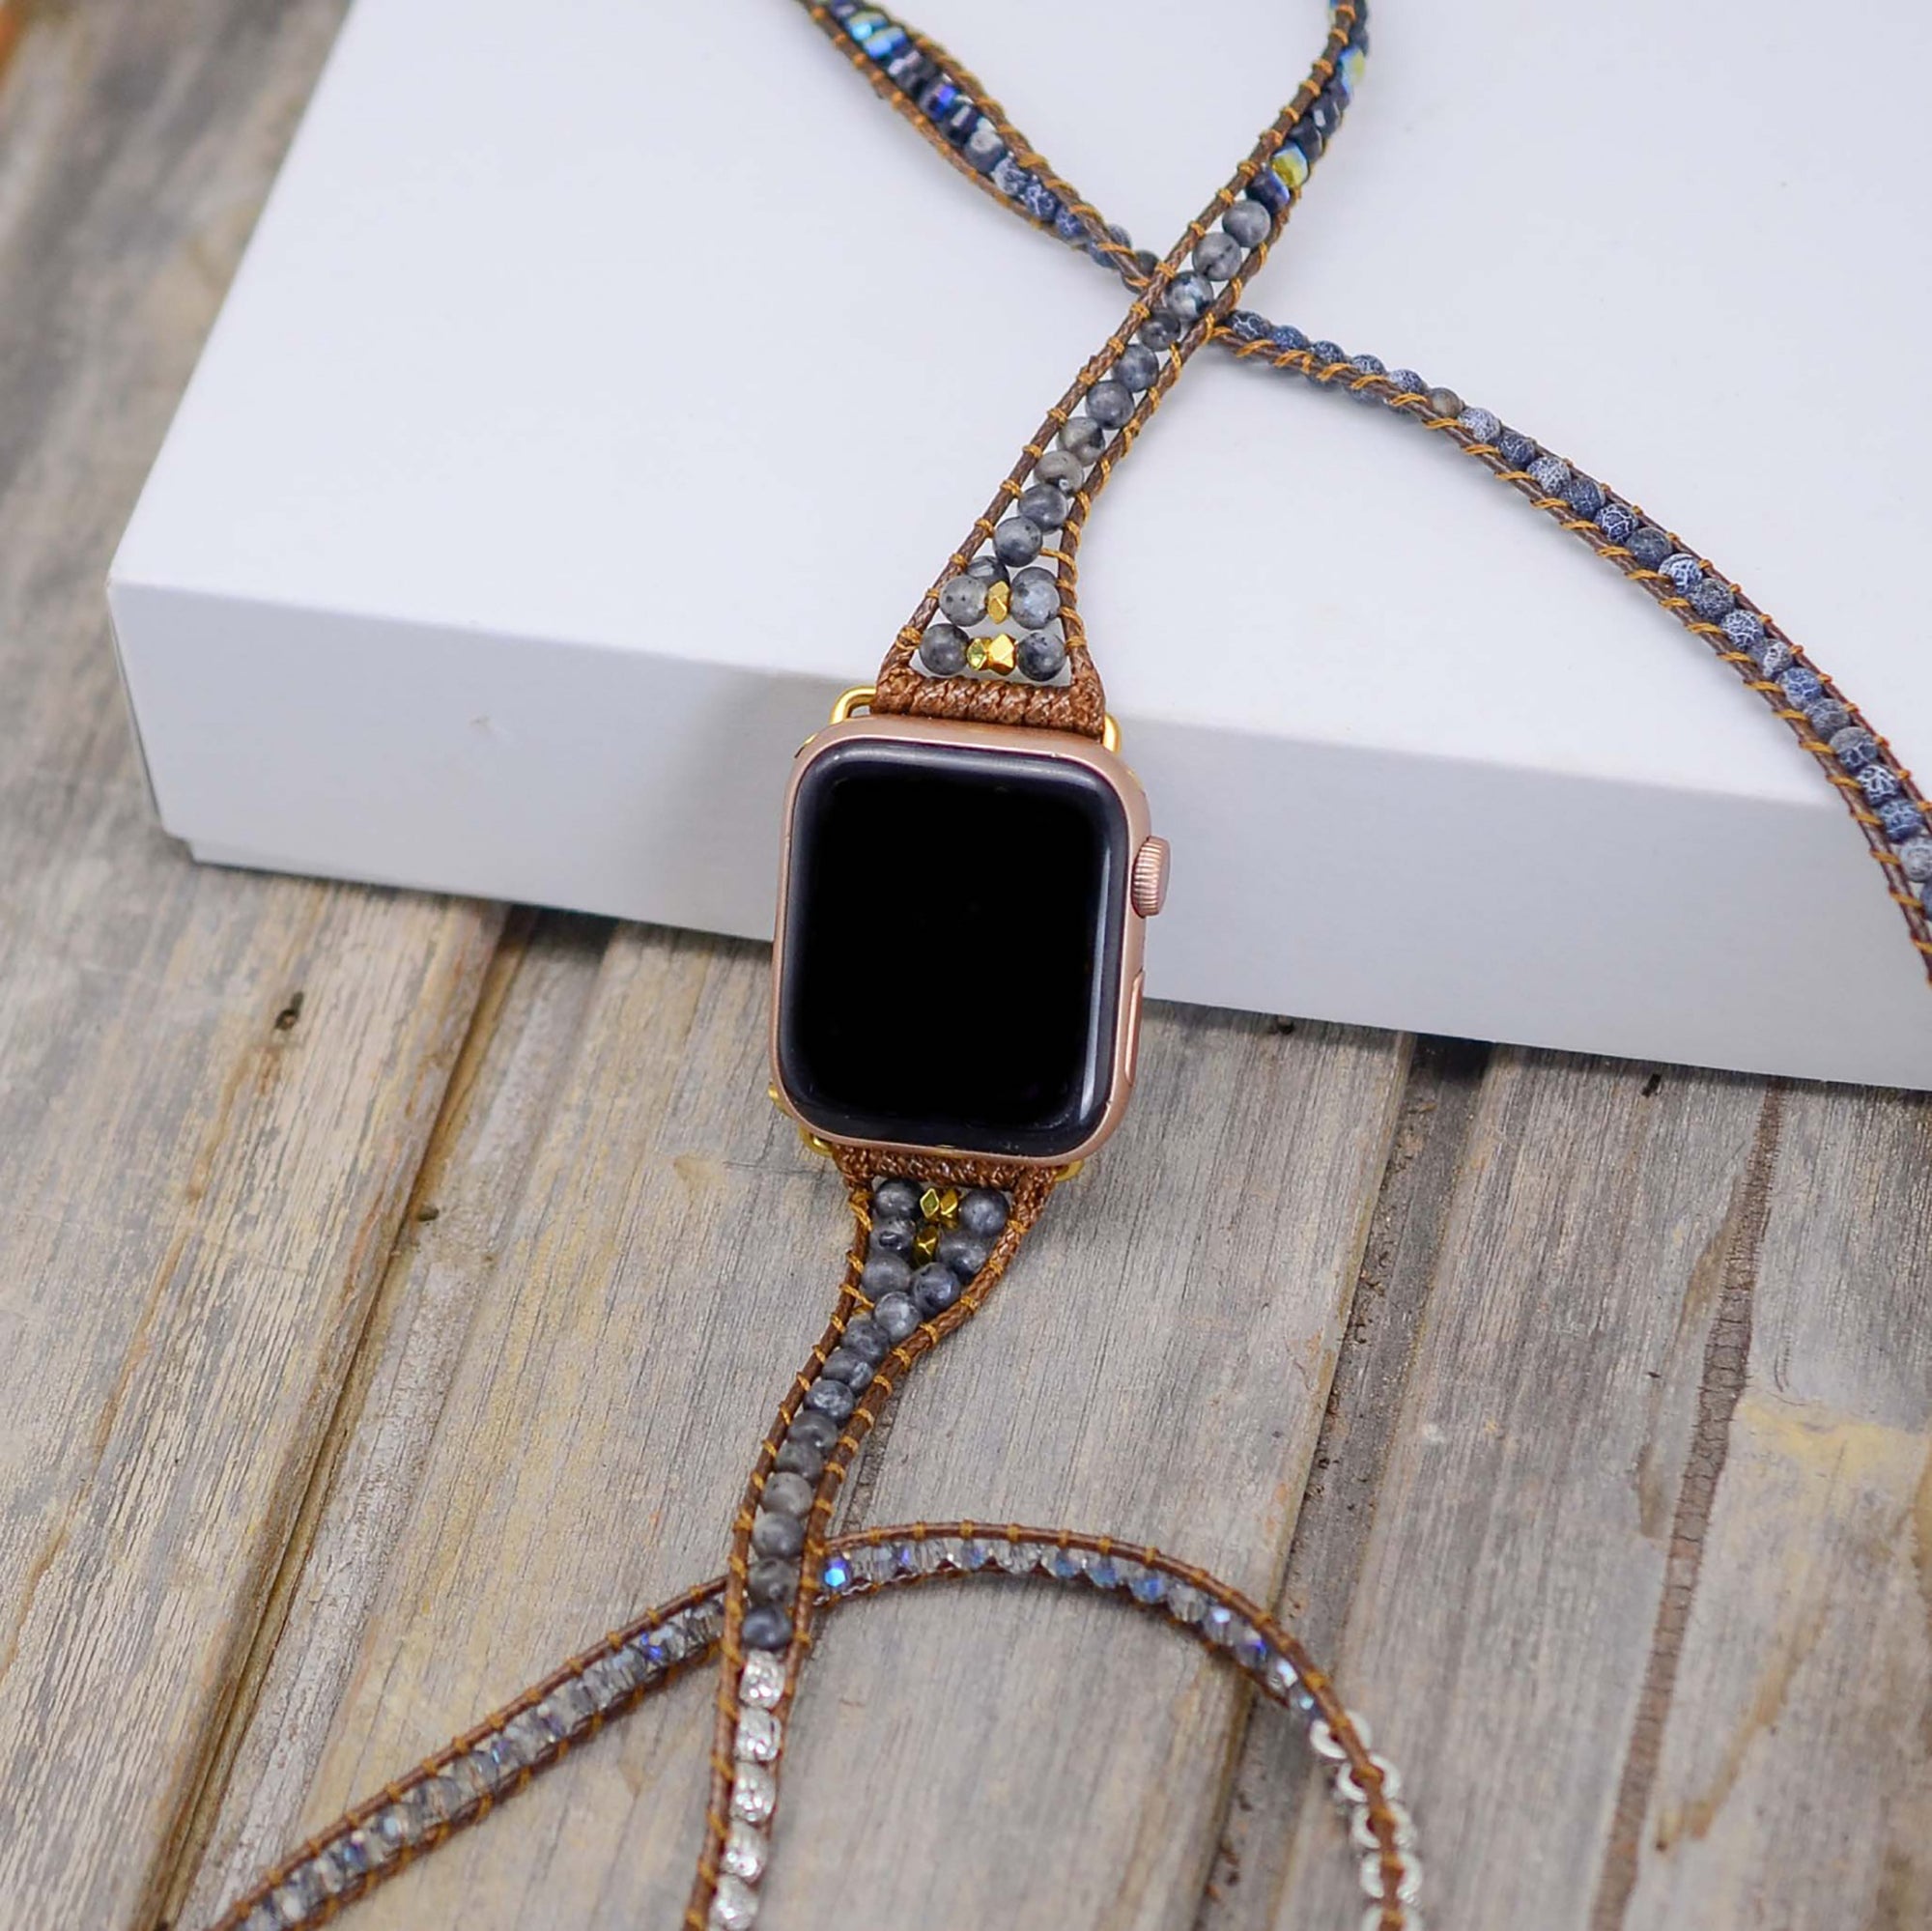 TEEPOLLO Personalized Onyx & Quartz Bohemian Handmade Apple Watch Band Strap